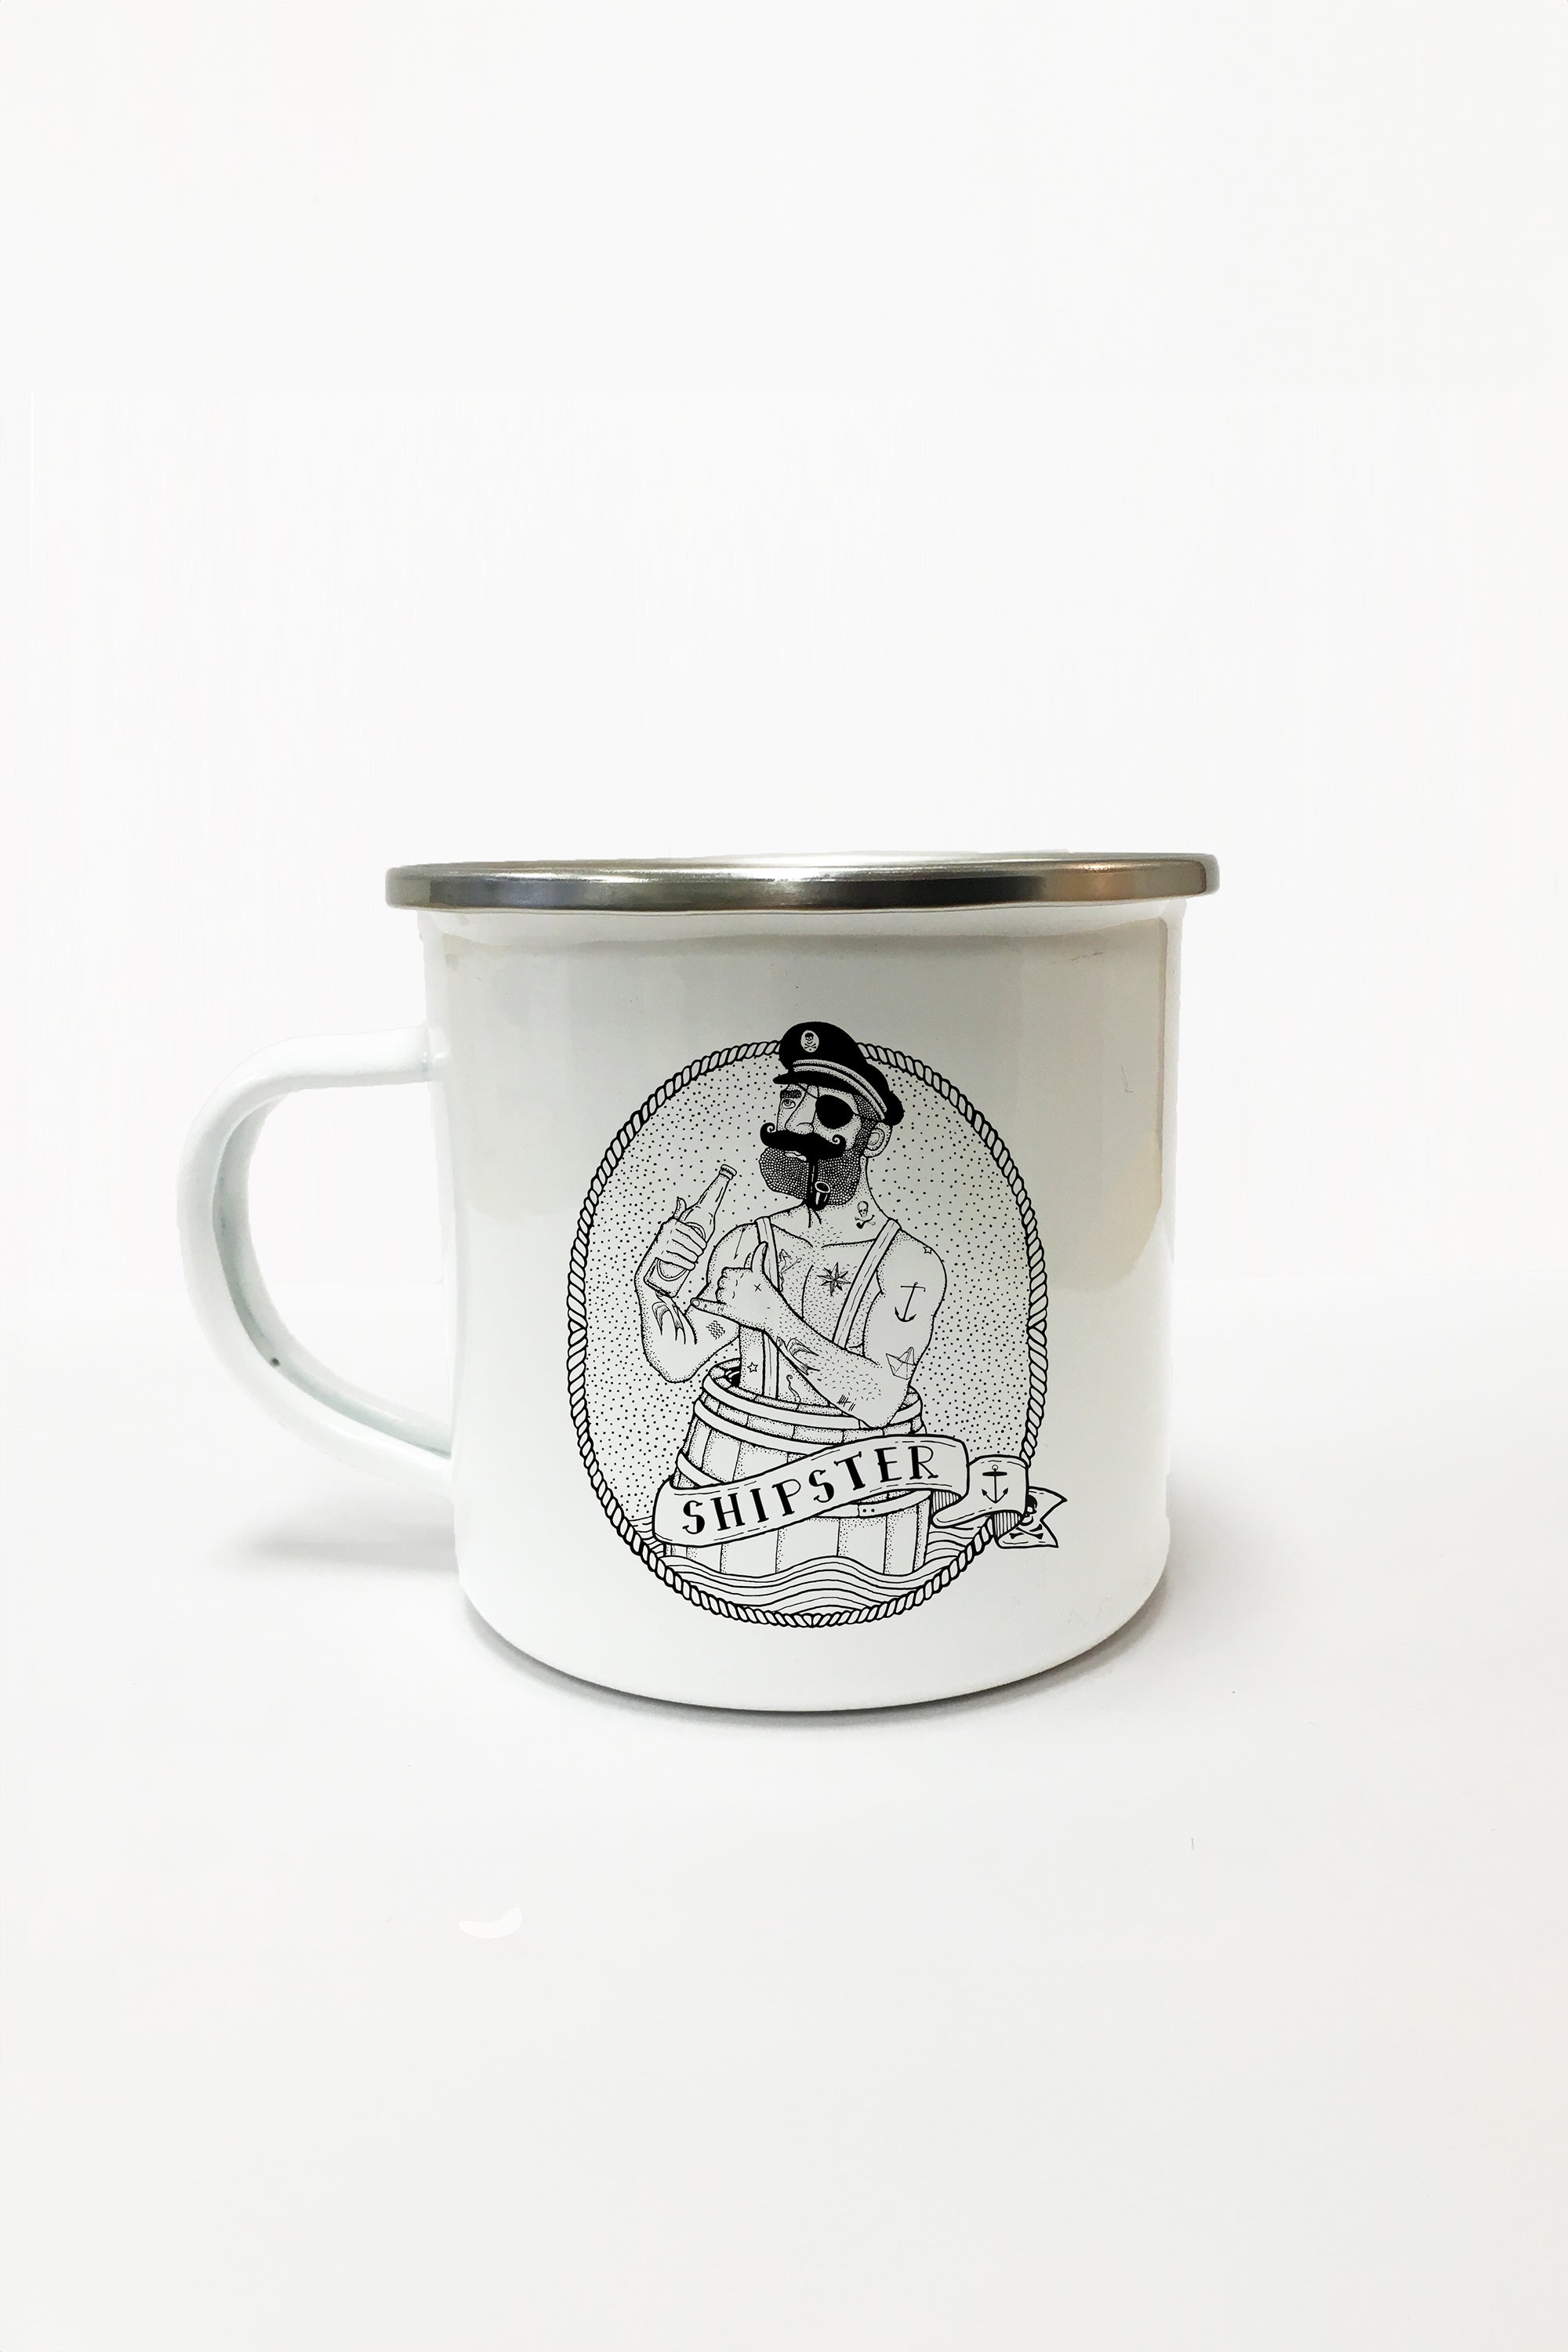 Classic Shipster Enamel Mug